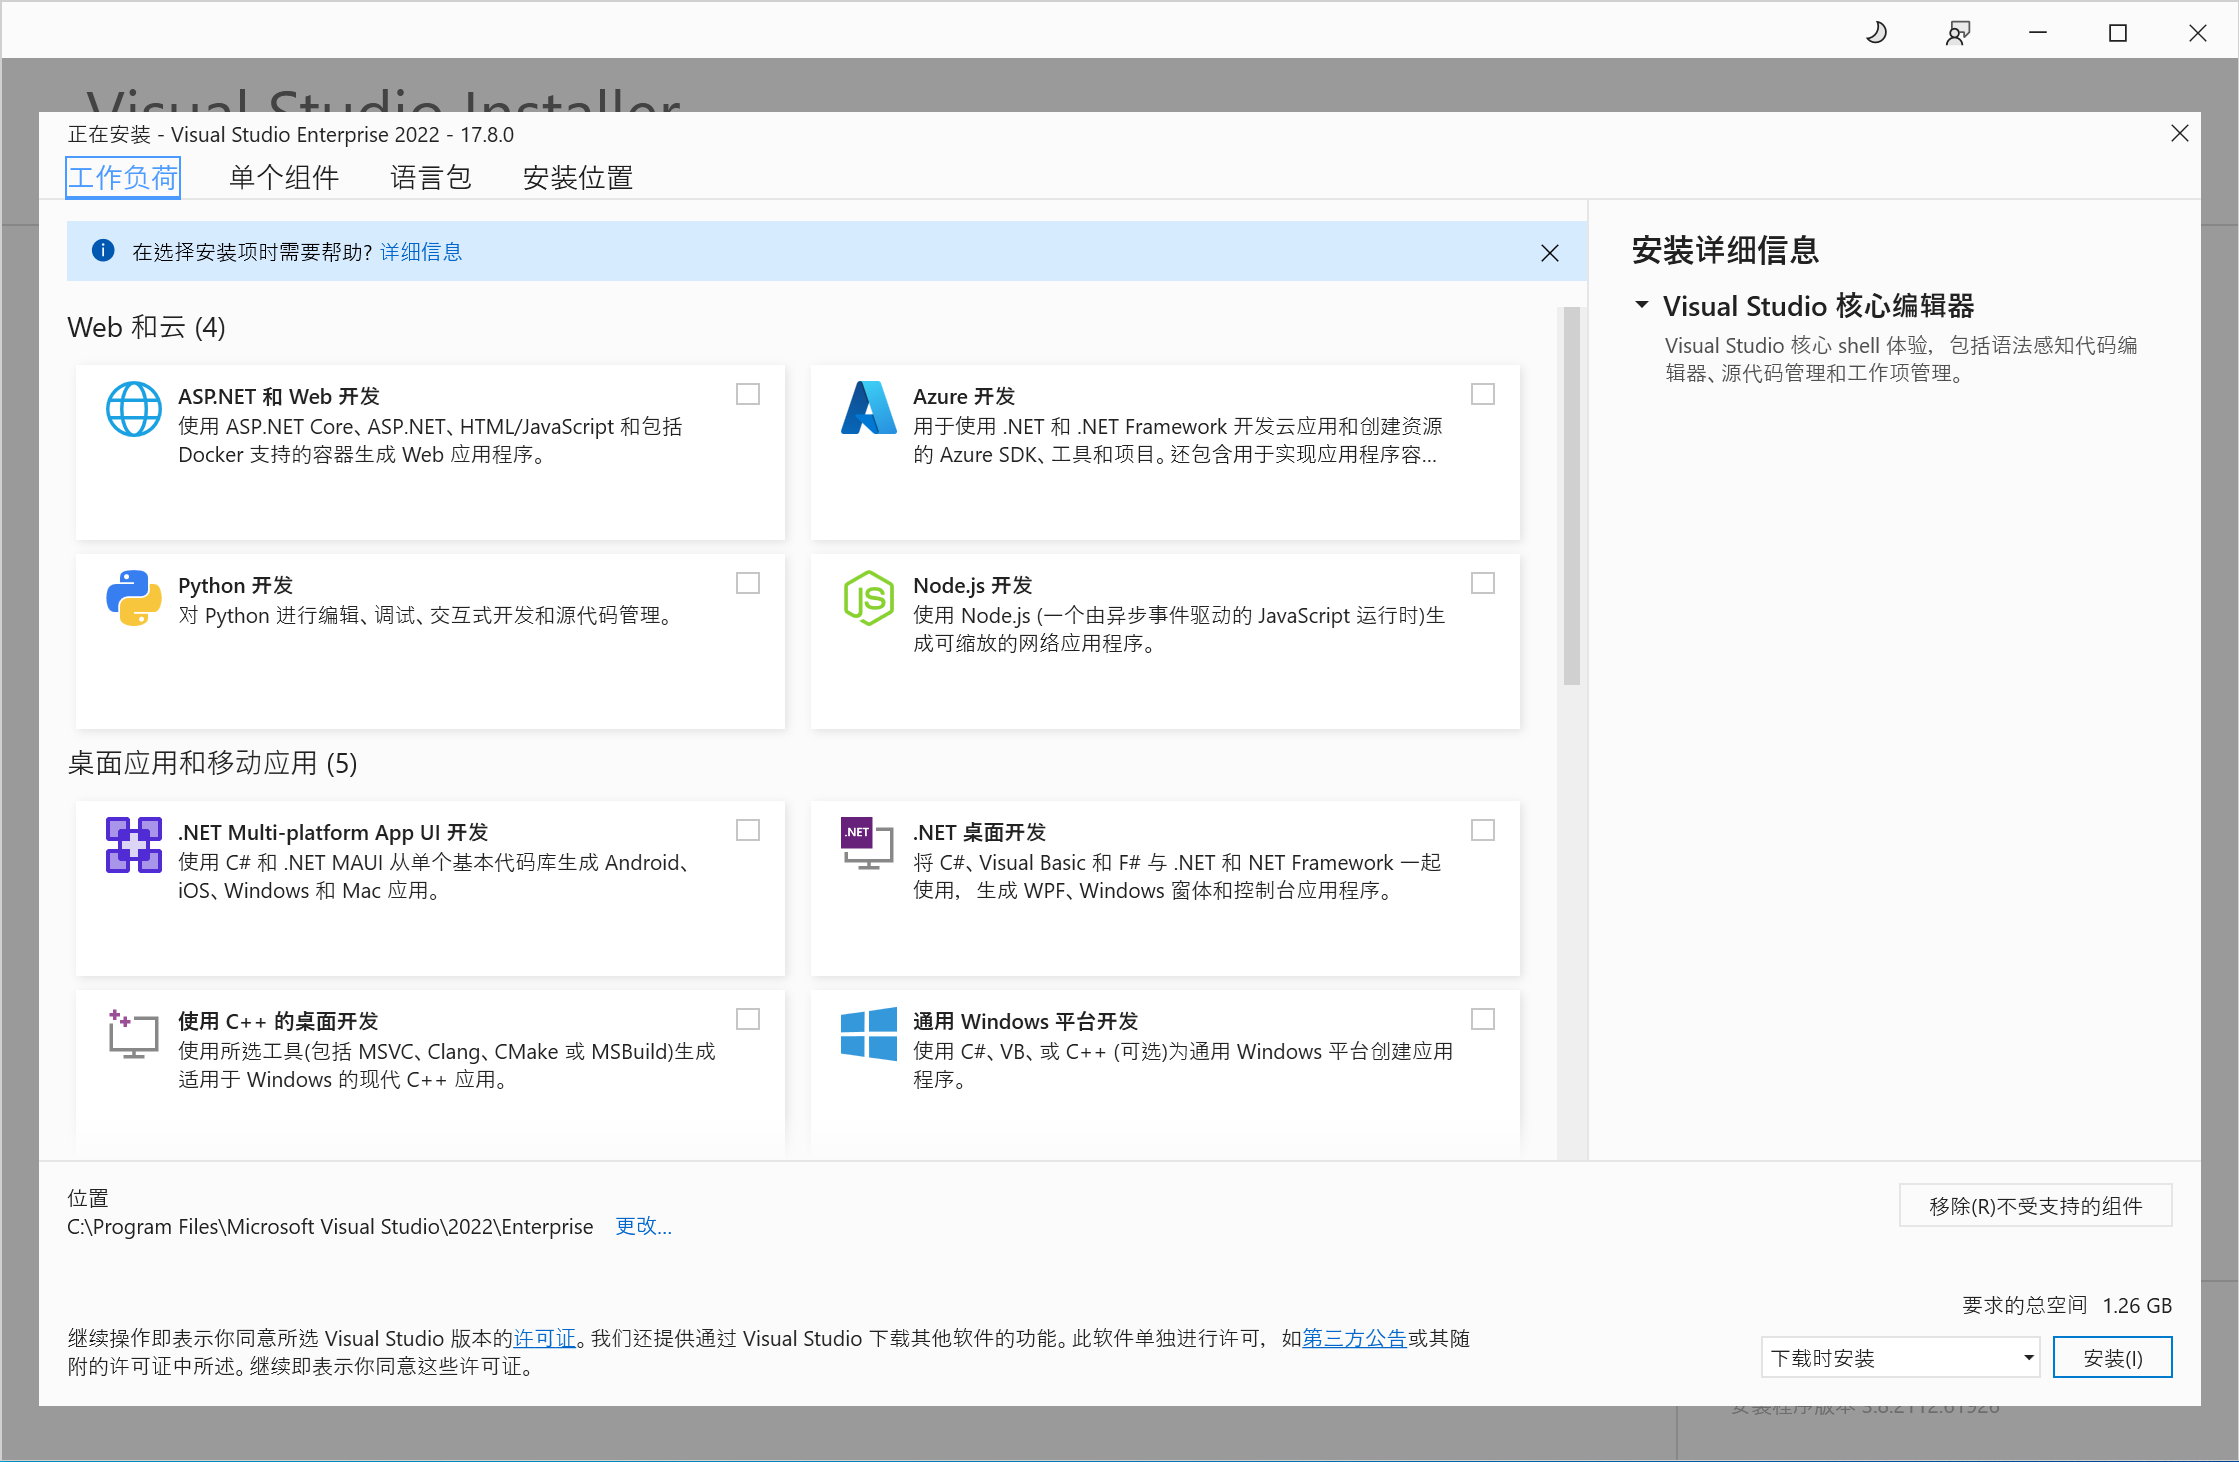 Microsoft Visual Studio Enterprise 2022 v17.8.3 x64 Multilingual 中文正式版